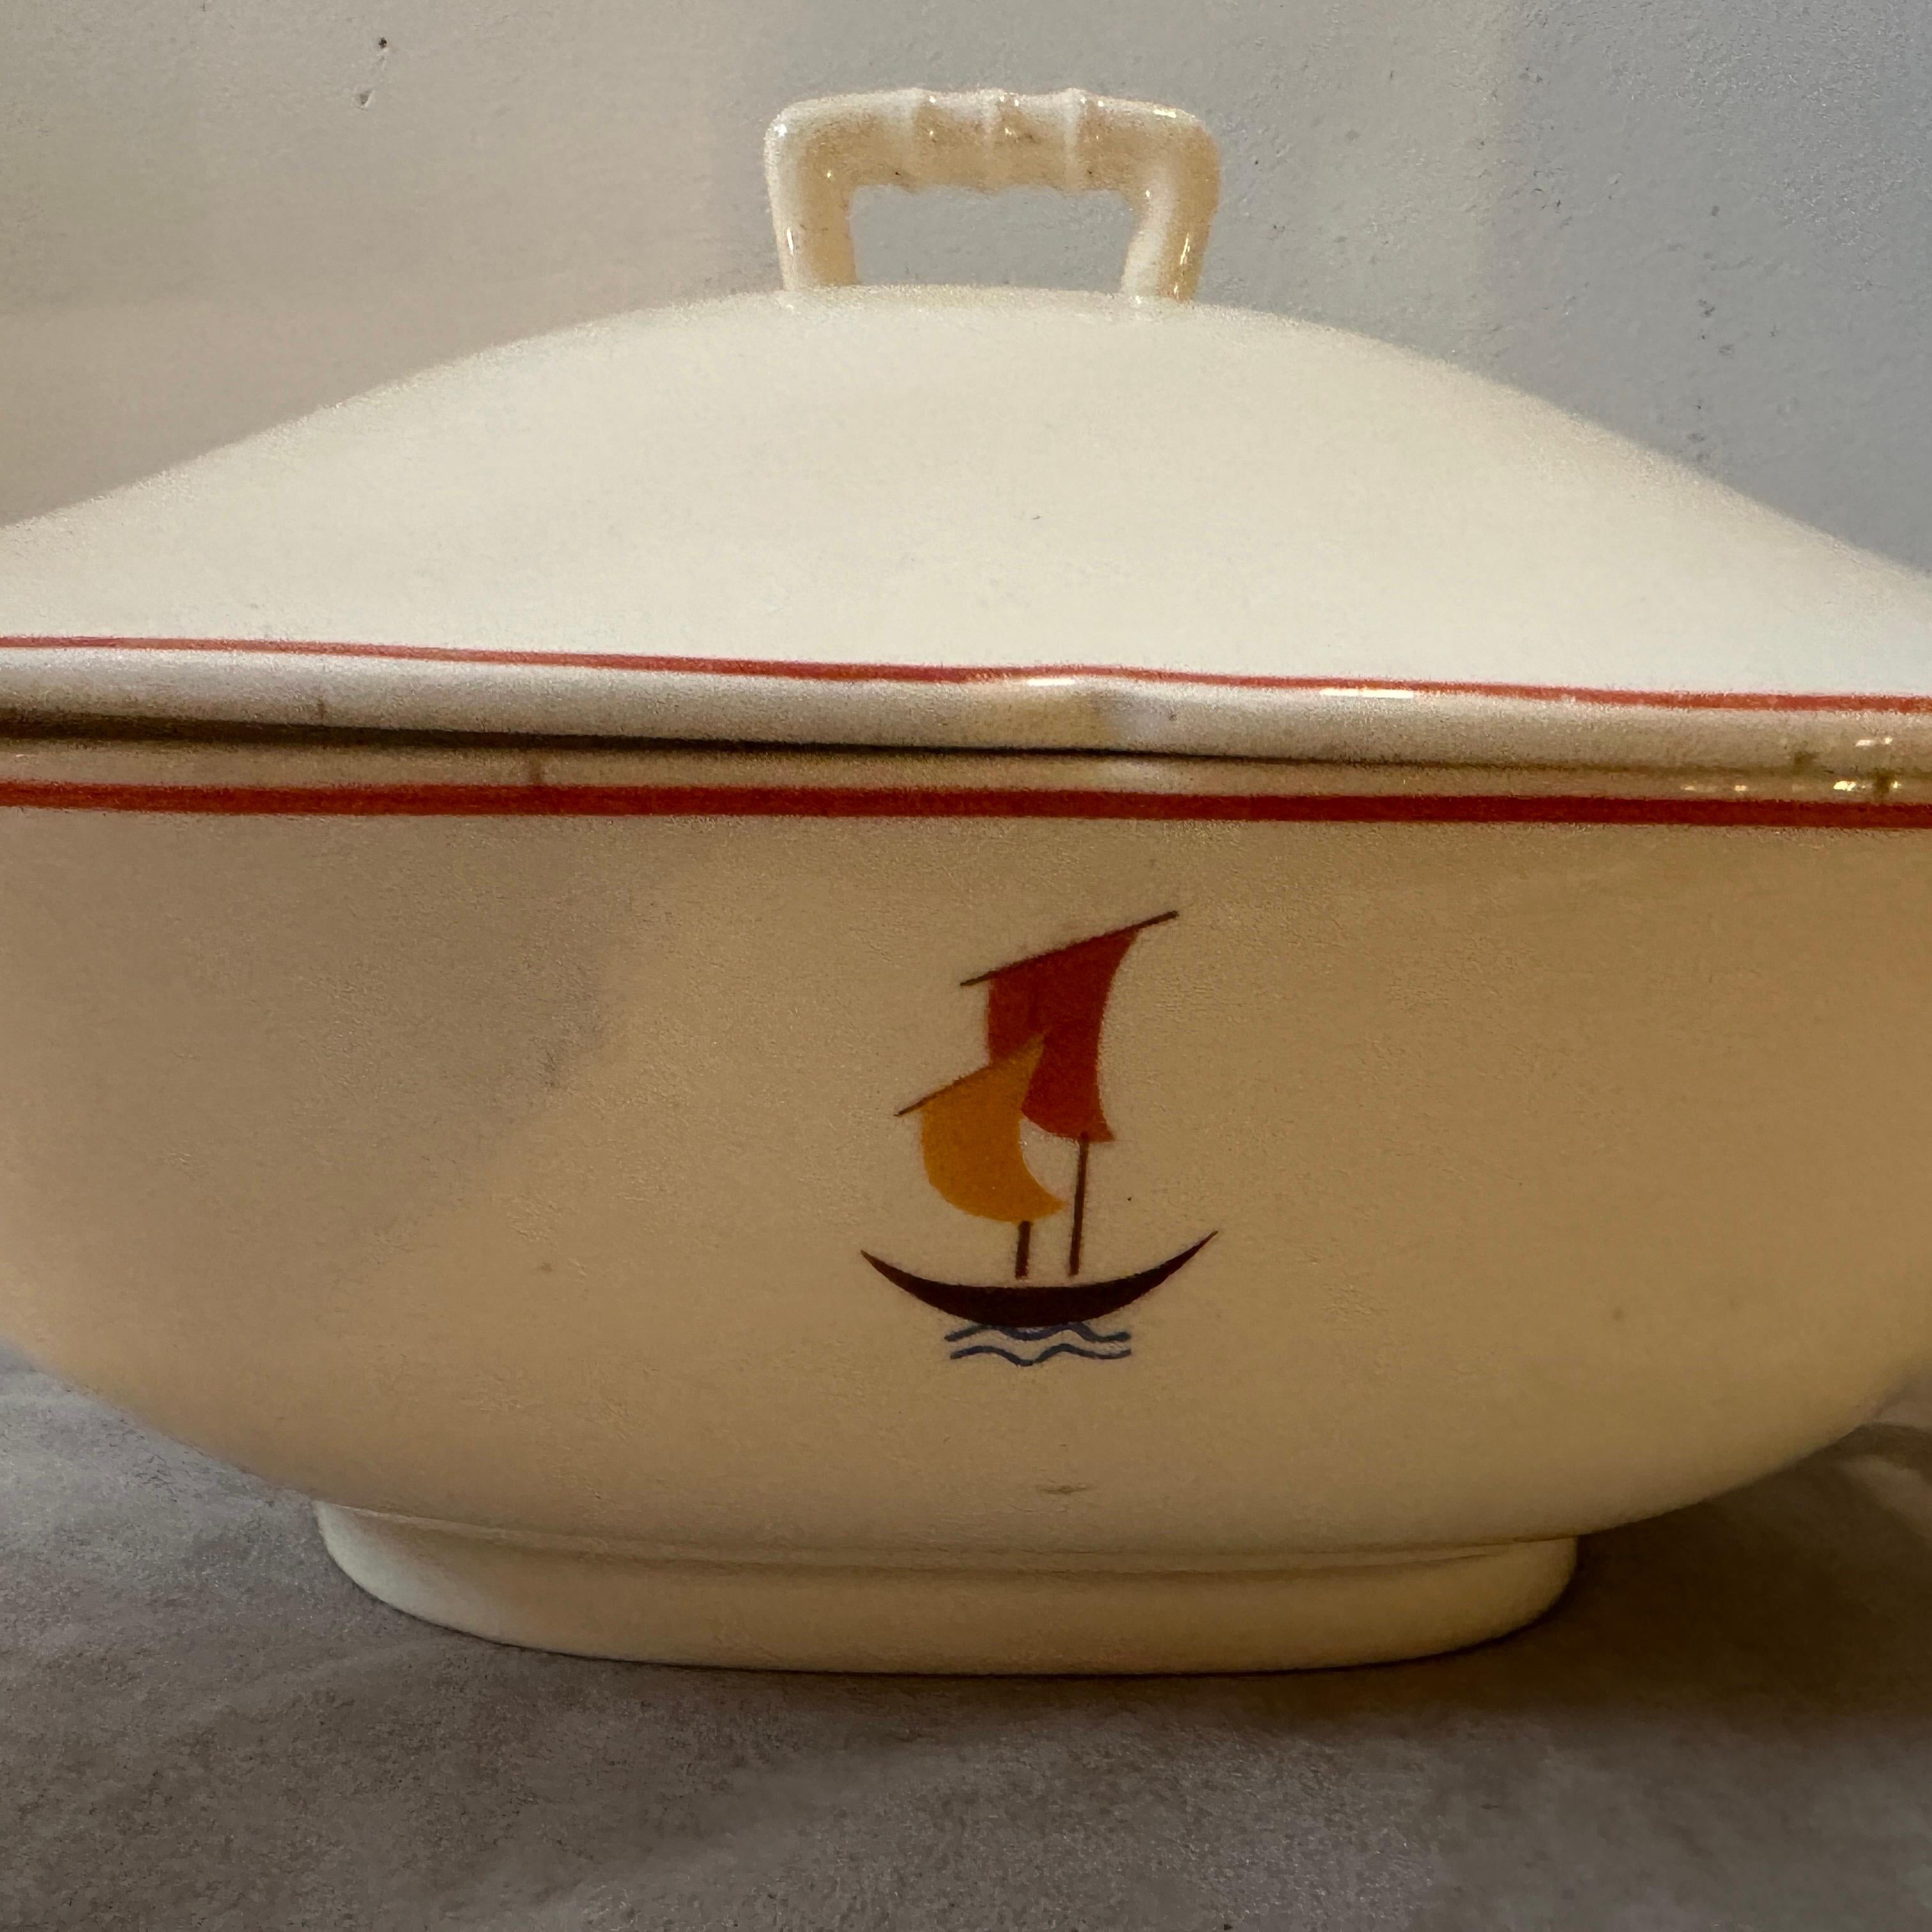 Italian 1935s Art Deco Ceramic Soup Tureen by Gio Ponti for S.C. Richard  For Sale